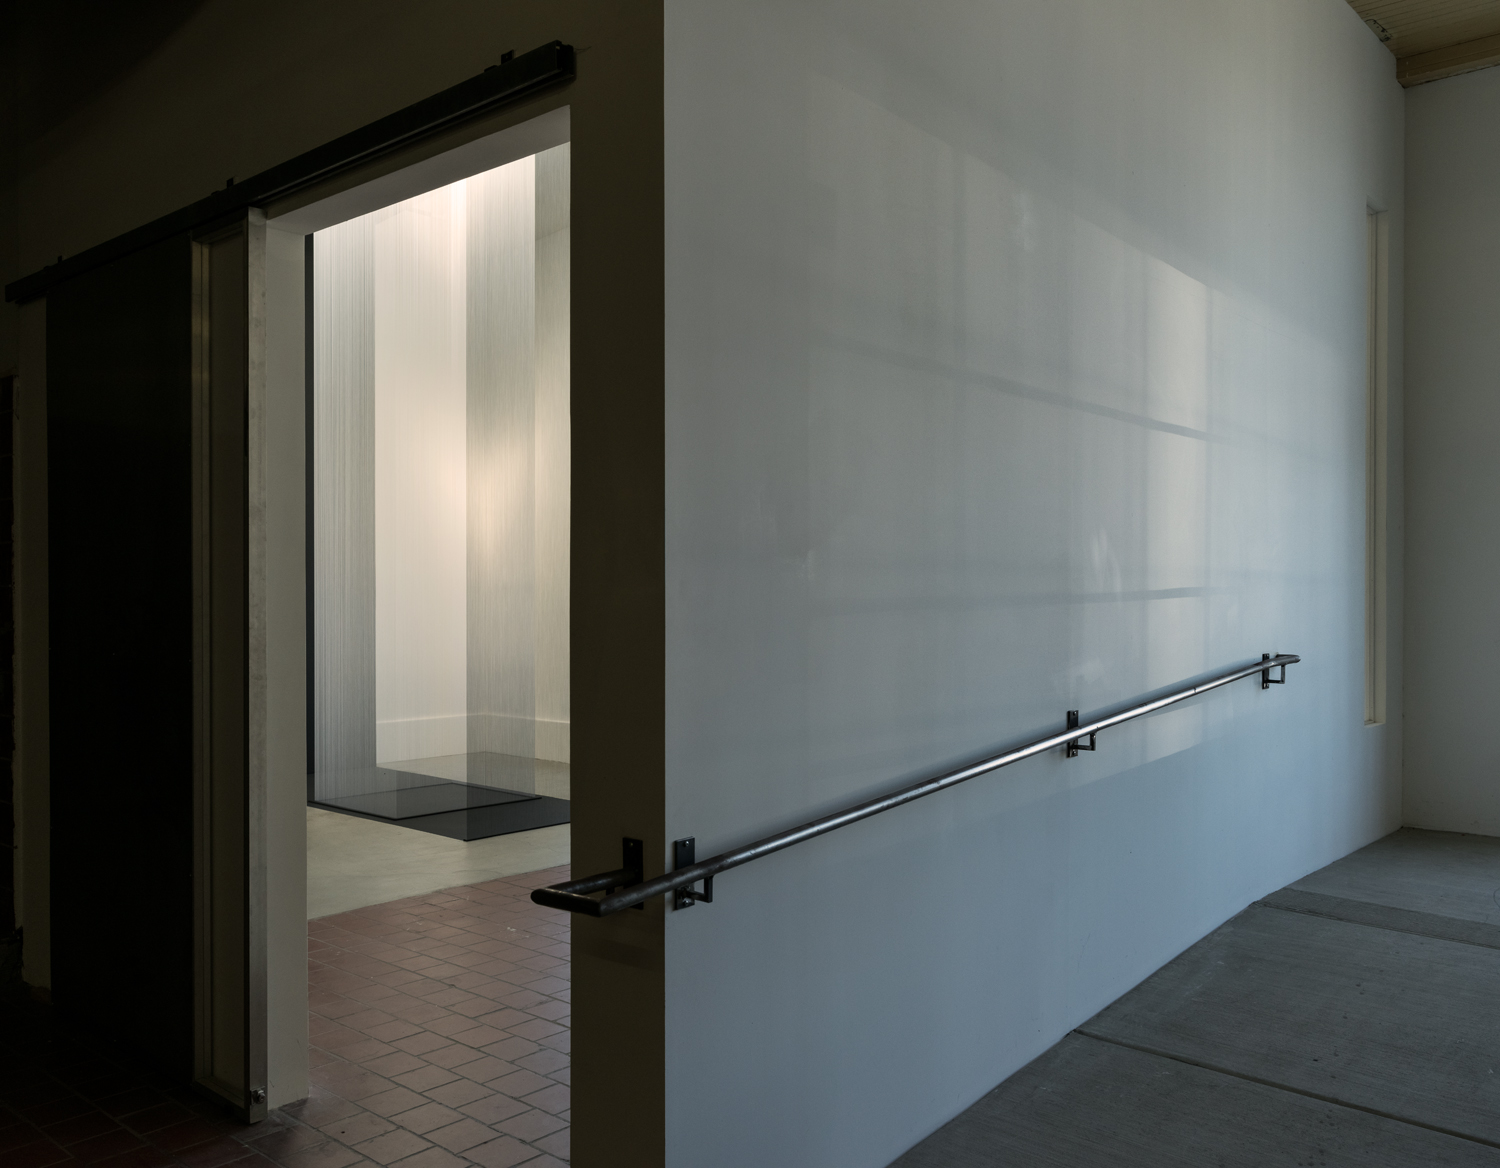  site conditioned installation  2015, ICE Gallery   Photos:&nbsp; Philipp Scholz Rittermann   